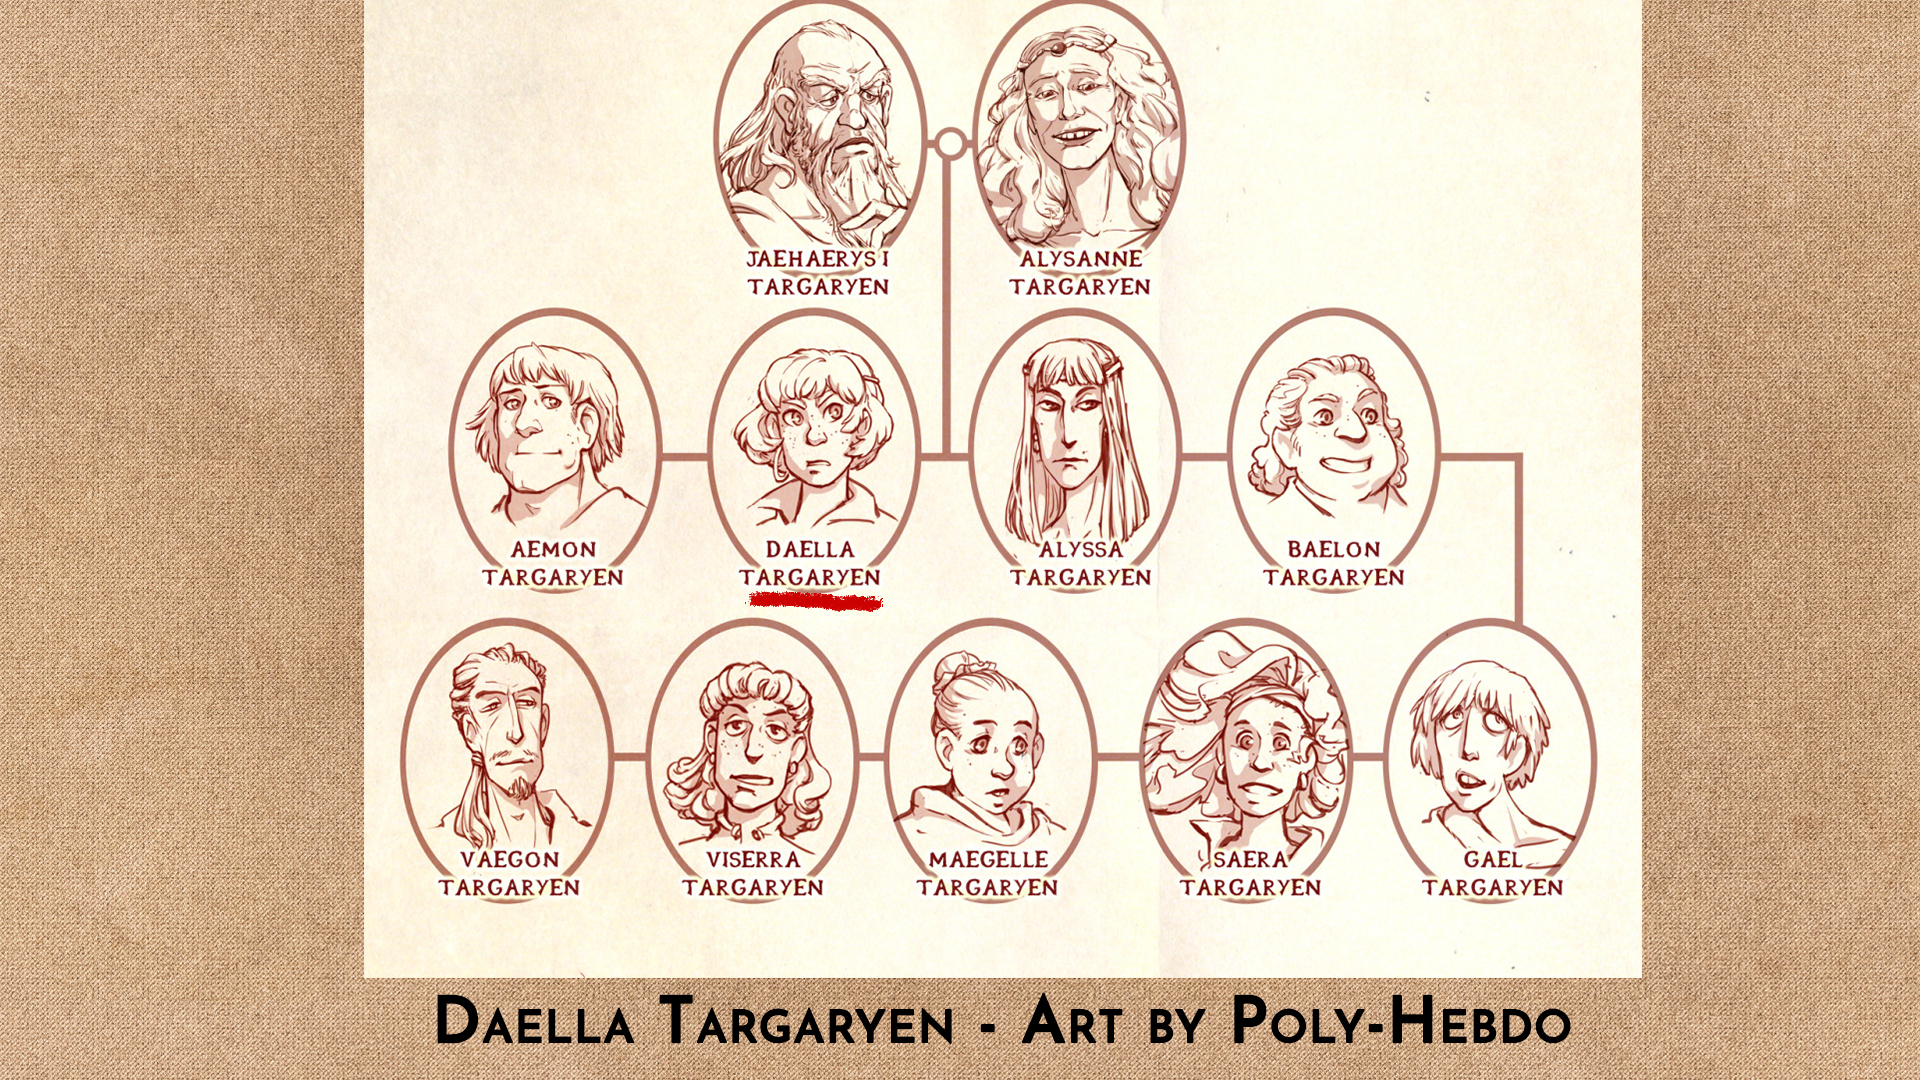 Daella Targaryen by Poly-Hebdo